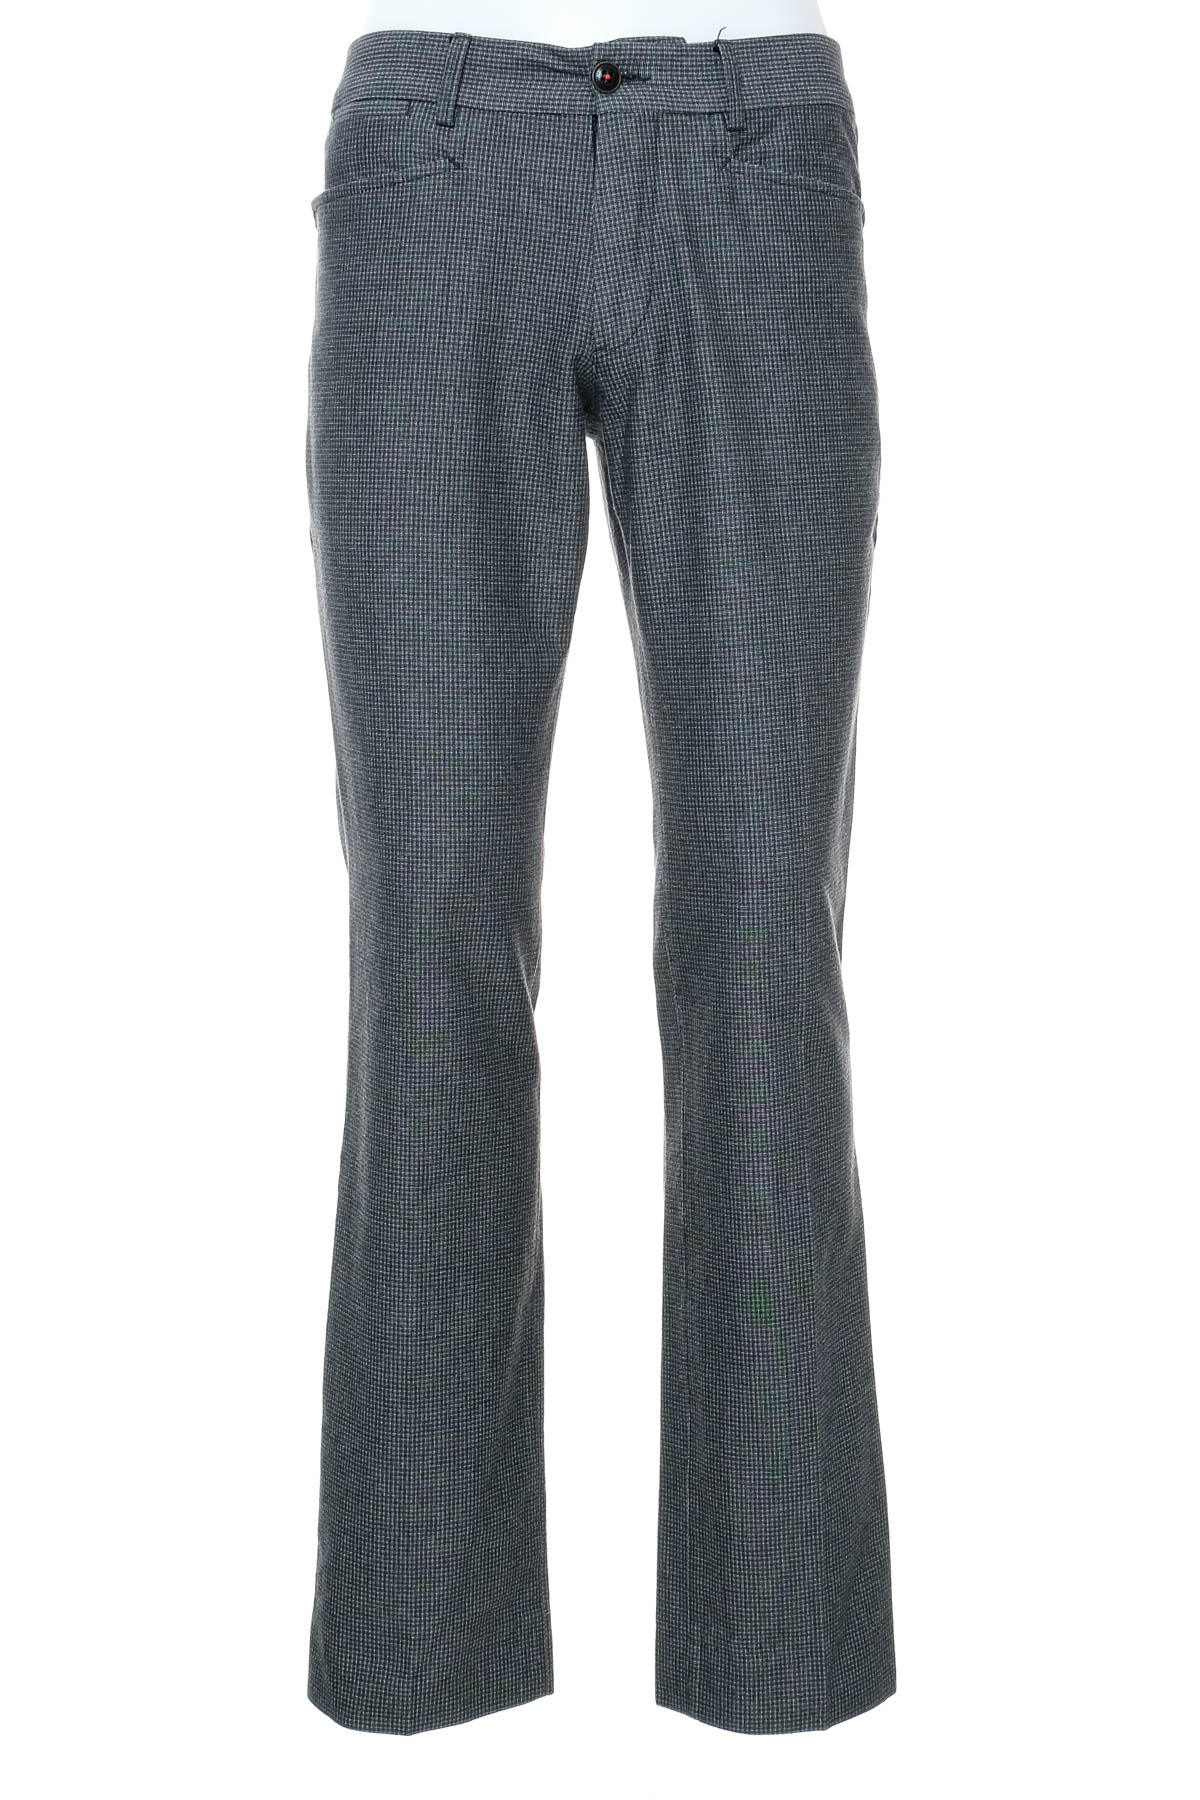 Pantalon pentru bărbați - MEXX - 0